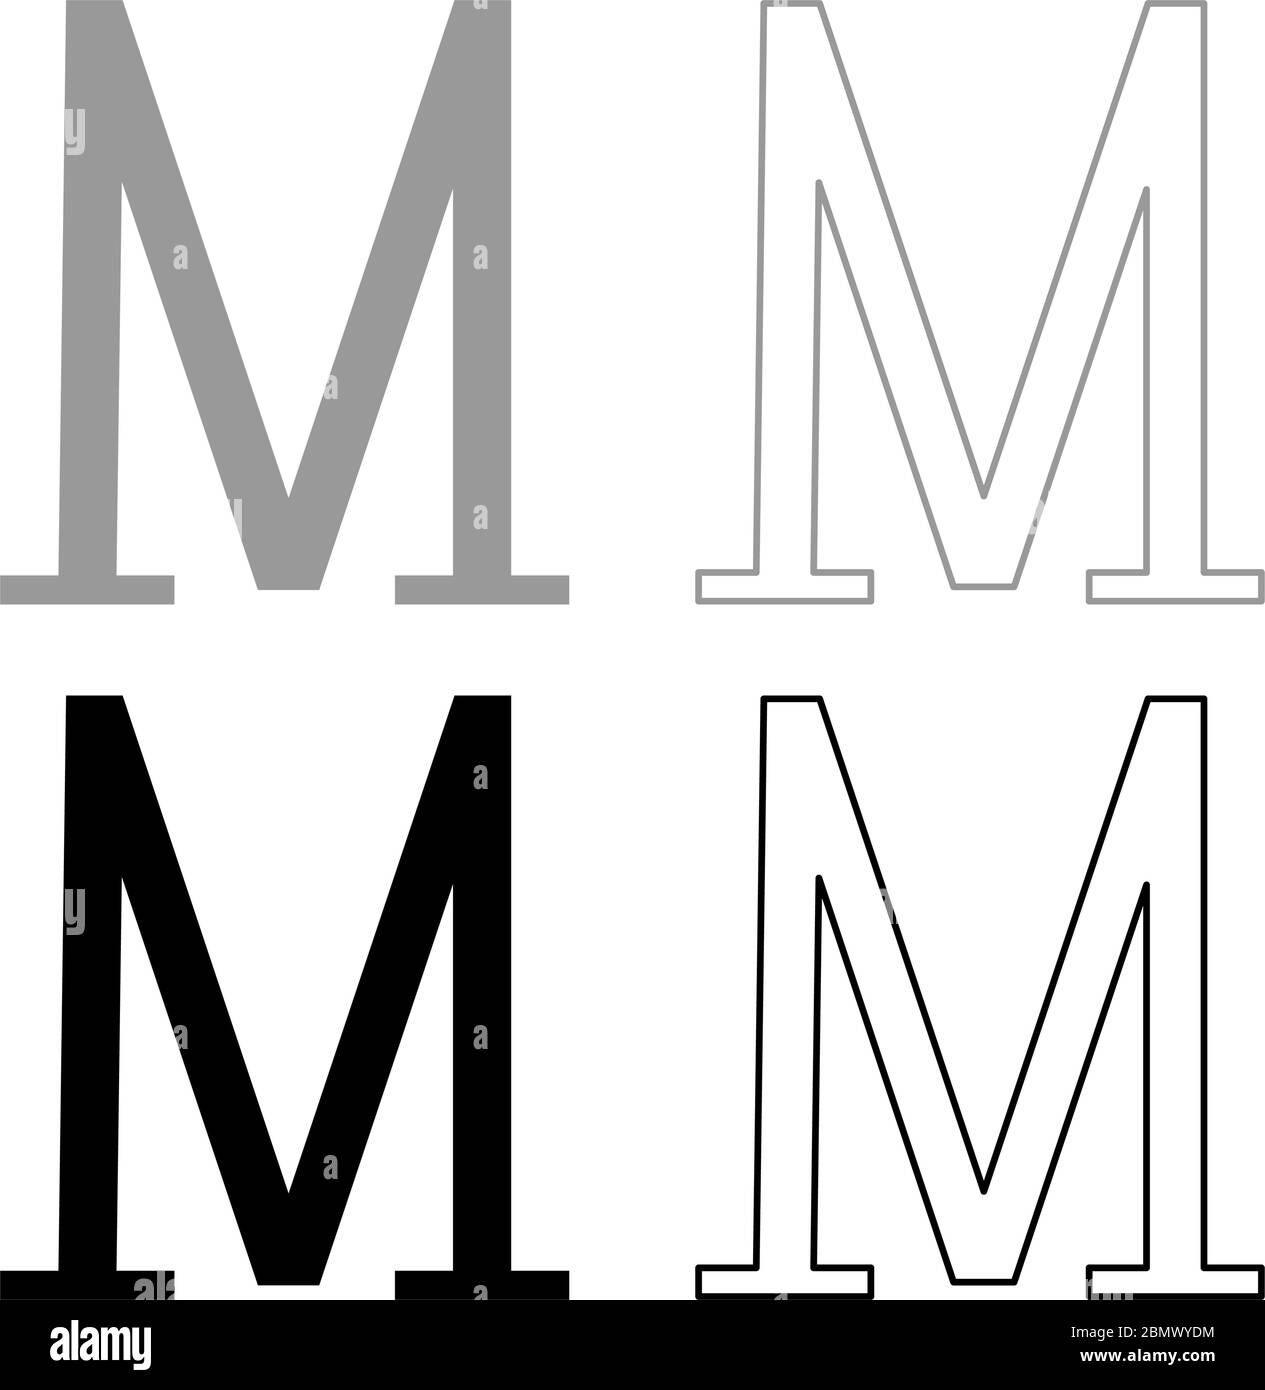 Mu greek symbol capital letter uppercase font icon outline set black grey color vector illustration flat style simple image Stock Vector